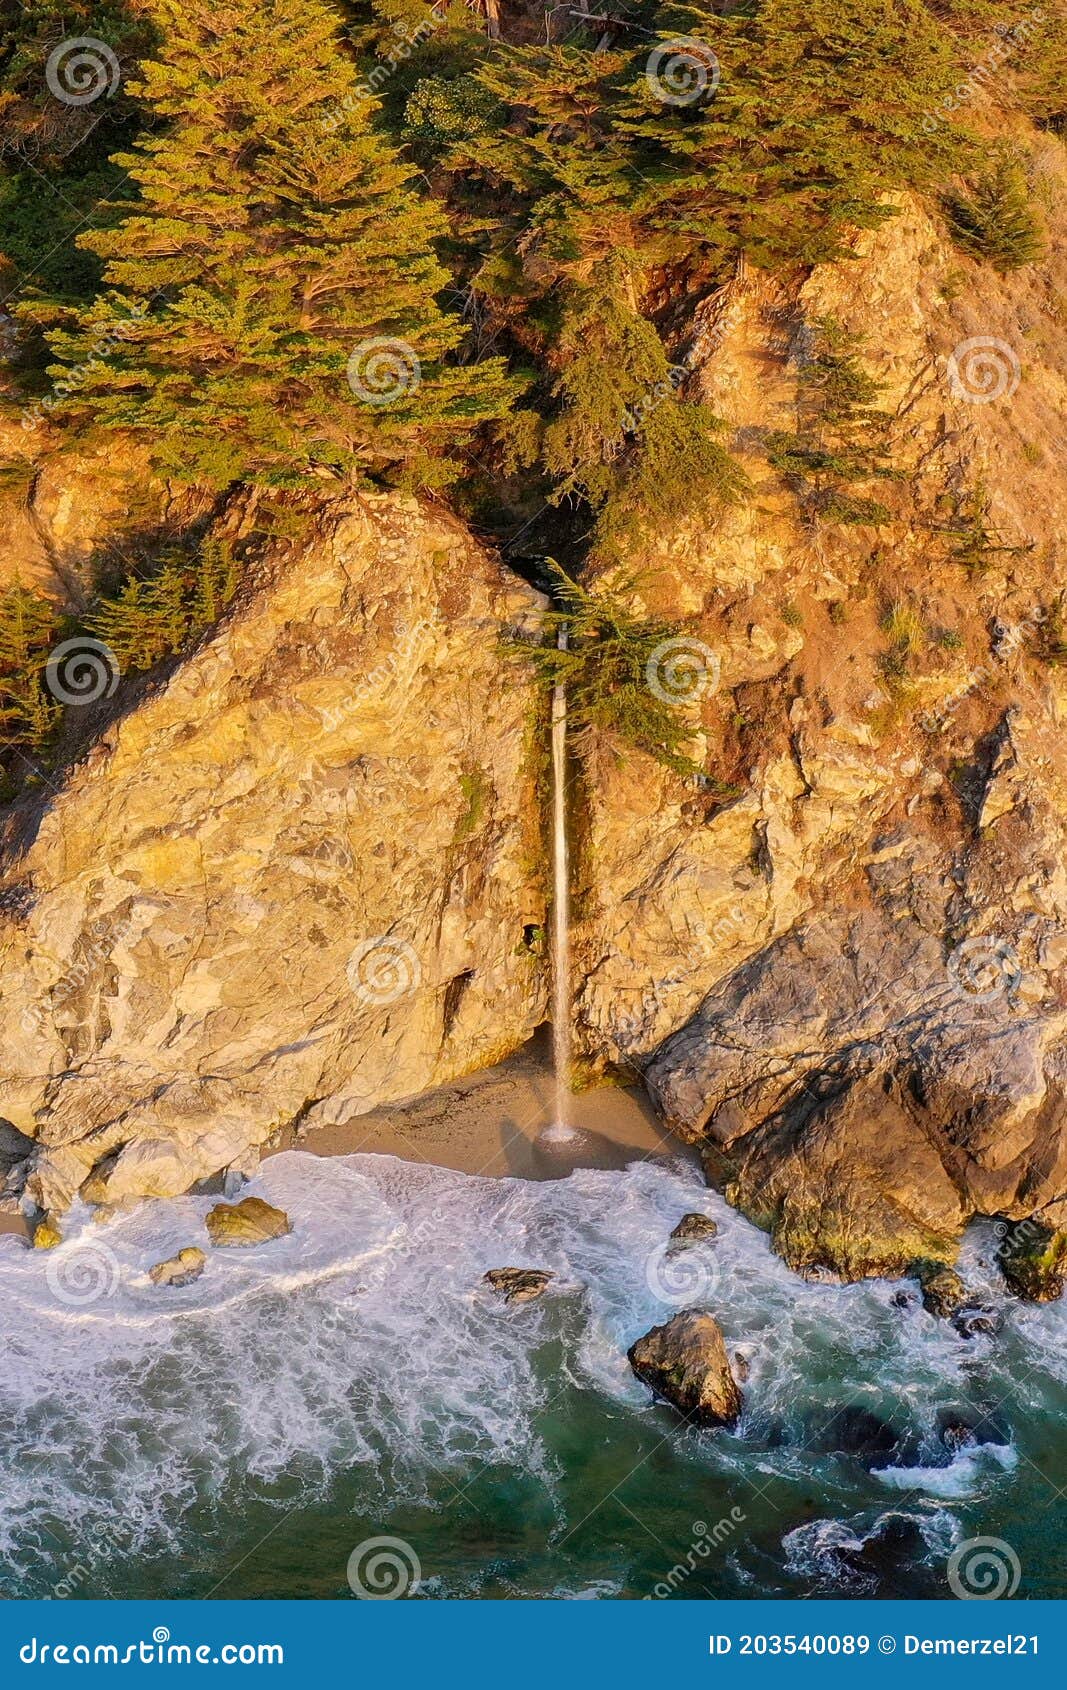 Mcway Falls Big Sur California Stock Image Image Of Stone Falls